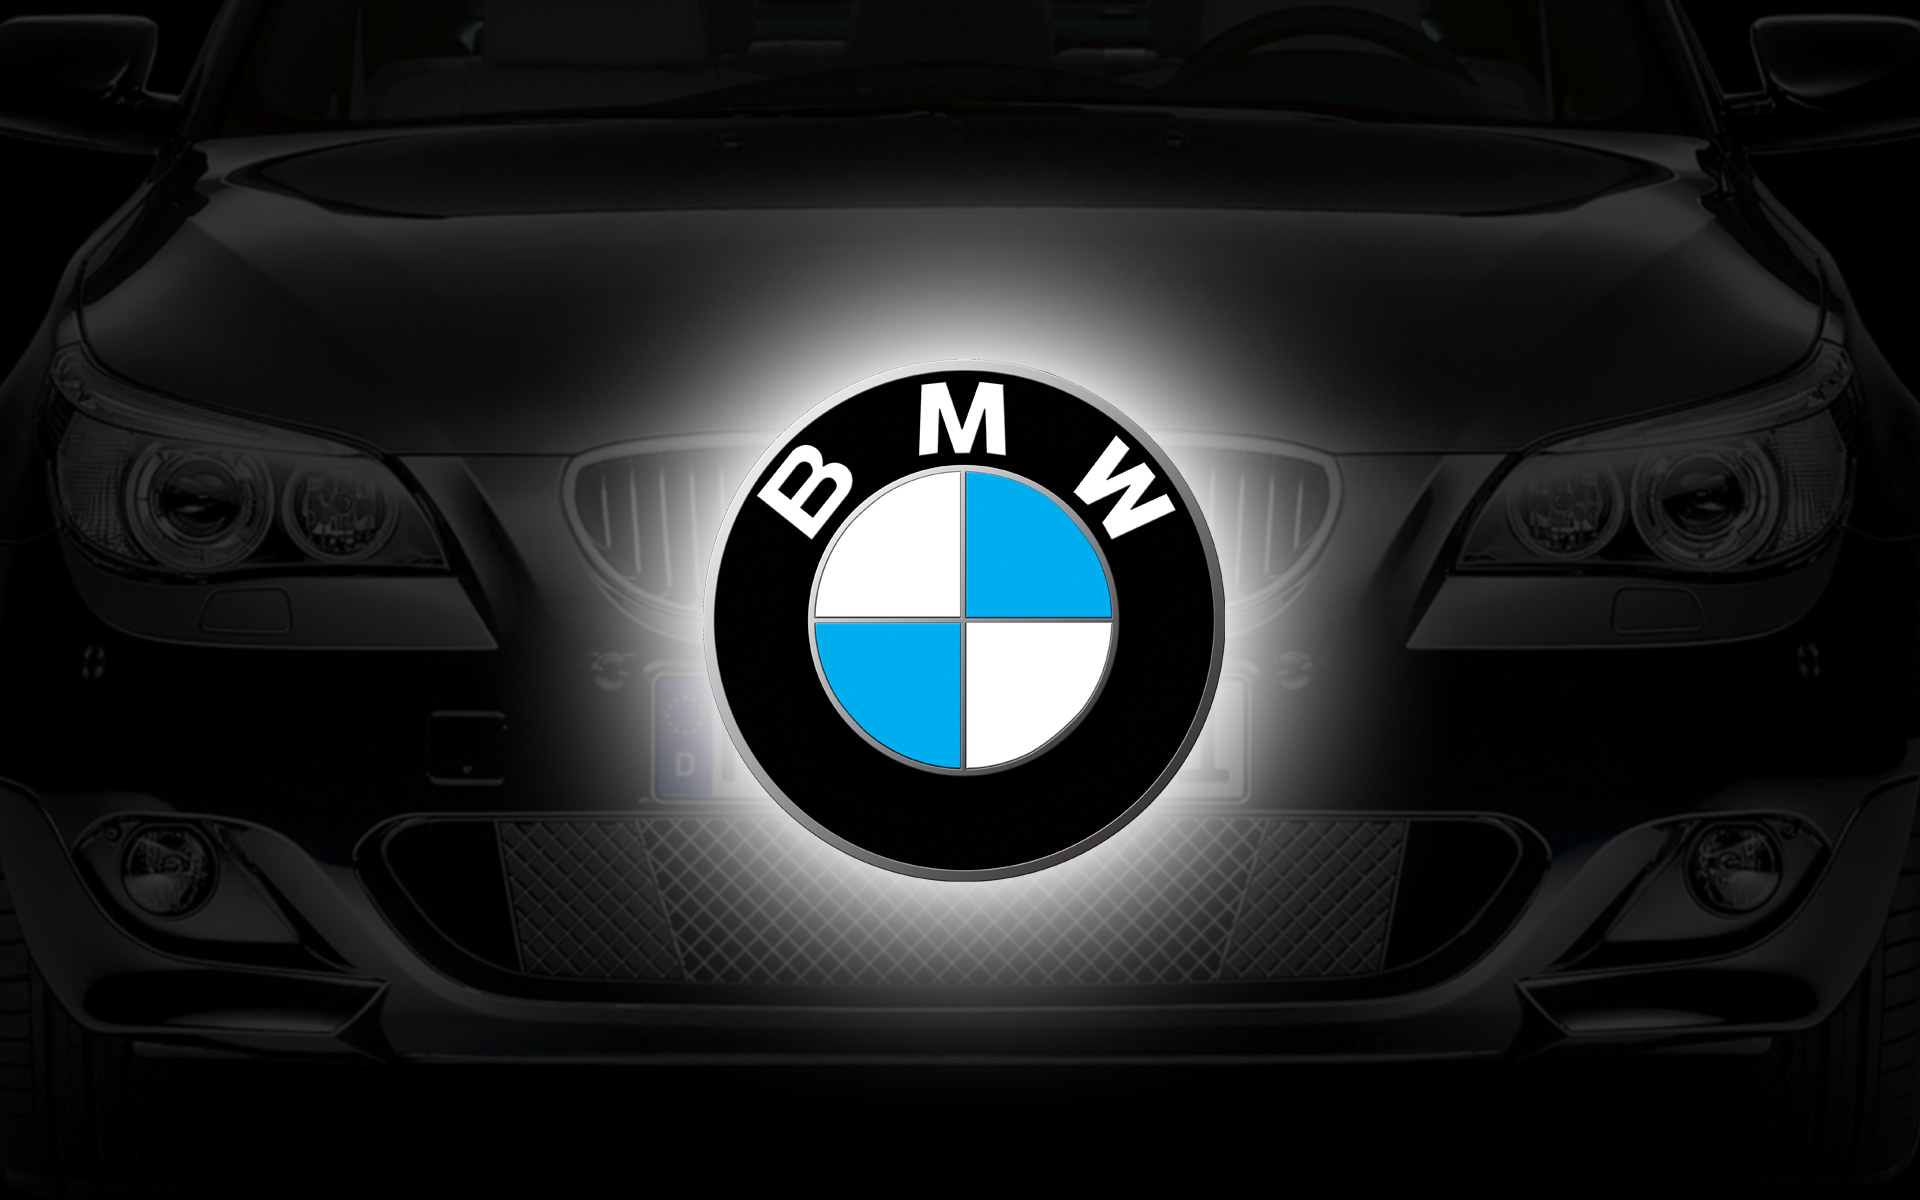 Ian Robertson, directivo de la empresa, indicó que BMW está en camino de lograr un récord de ventas mundial